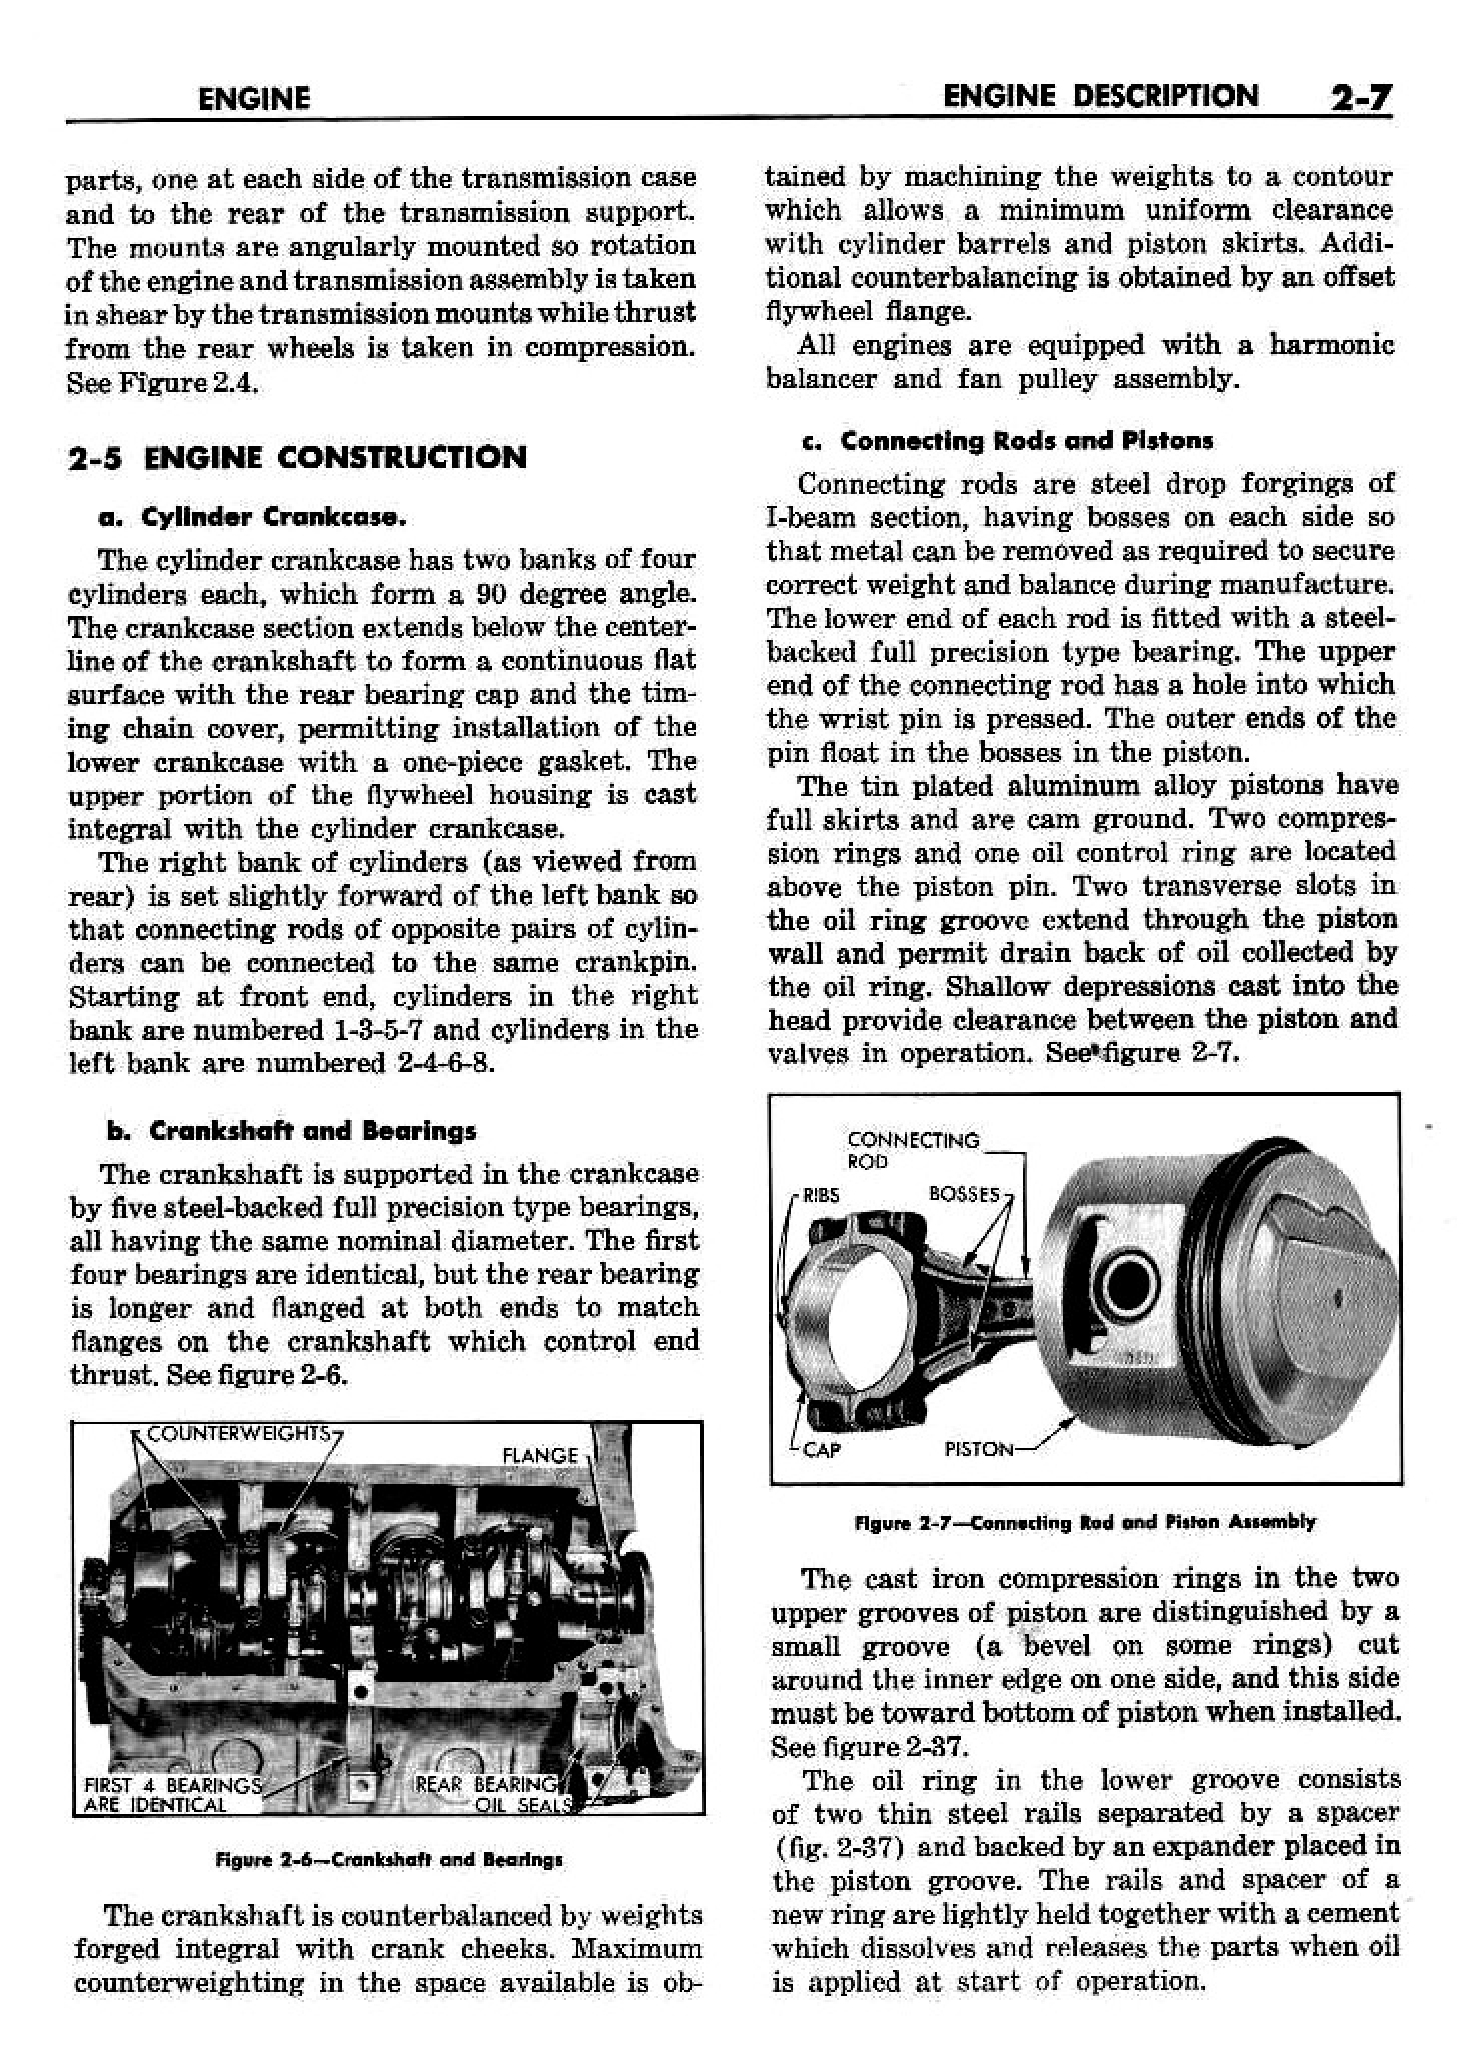 n_03 1958 Buick Shop Manual - Engine_7.jpg